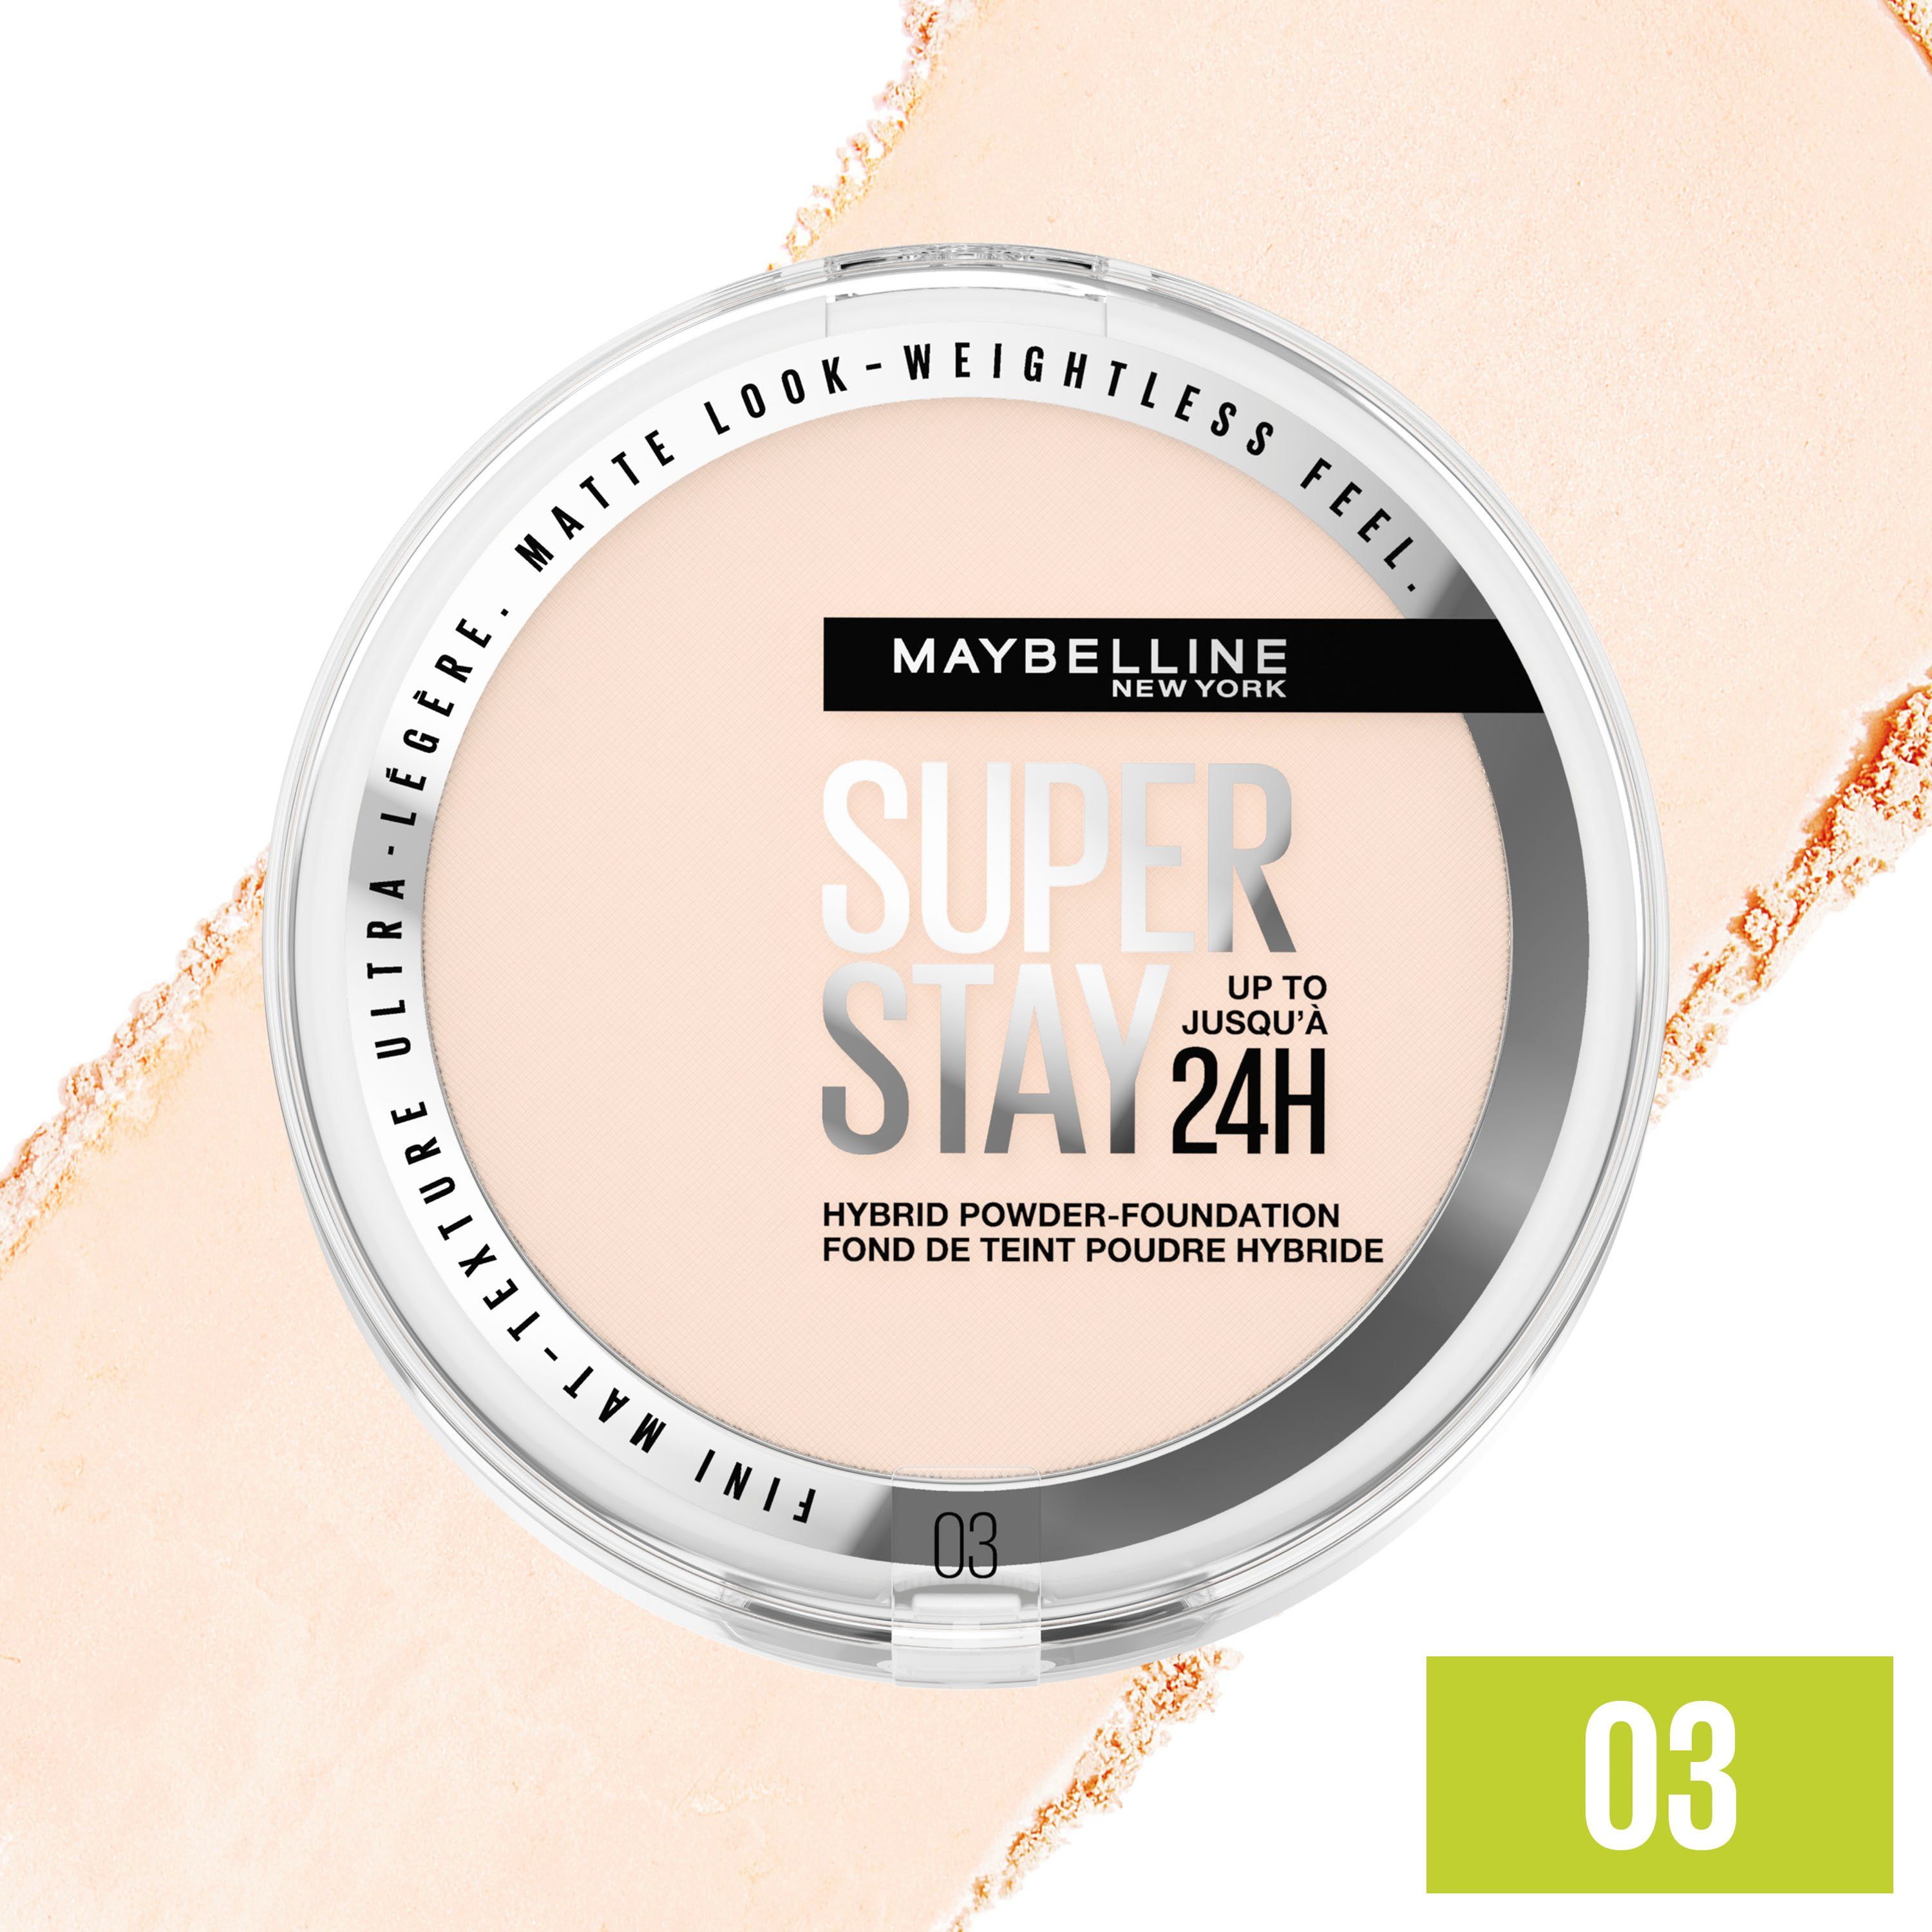 YORK Maybelline Hybrides Puder York Foundation New Stay NEW Make-Up Super MAYBELLINE